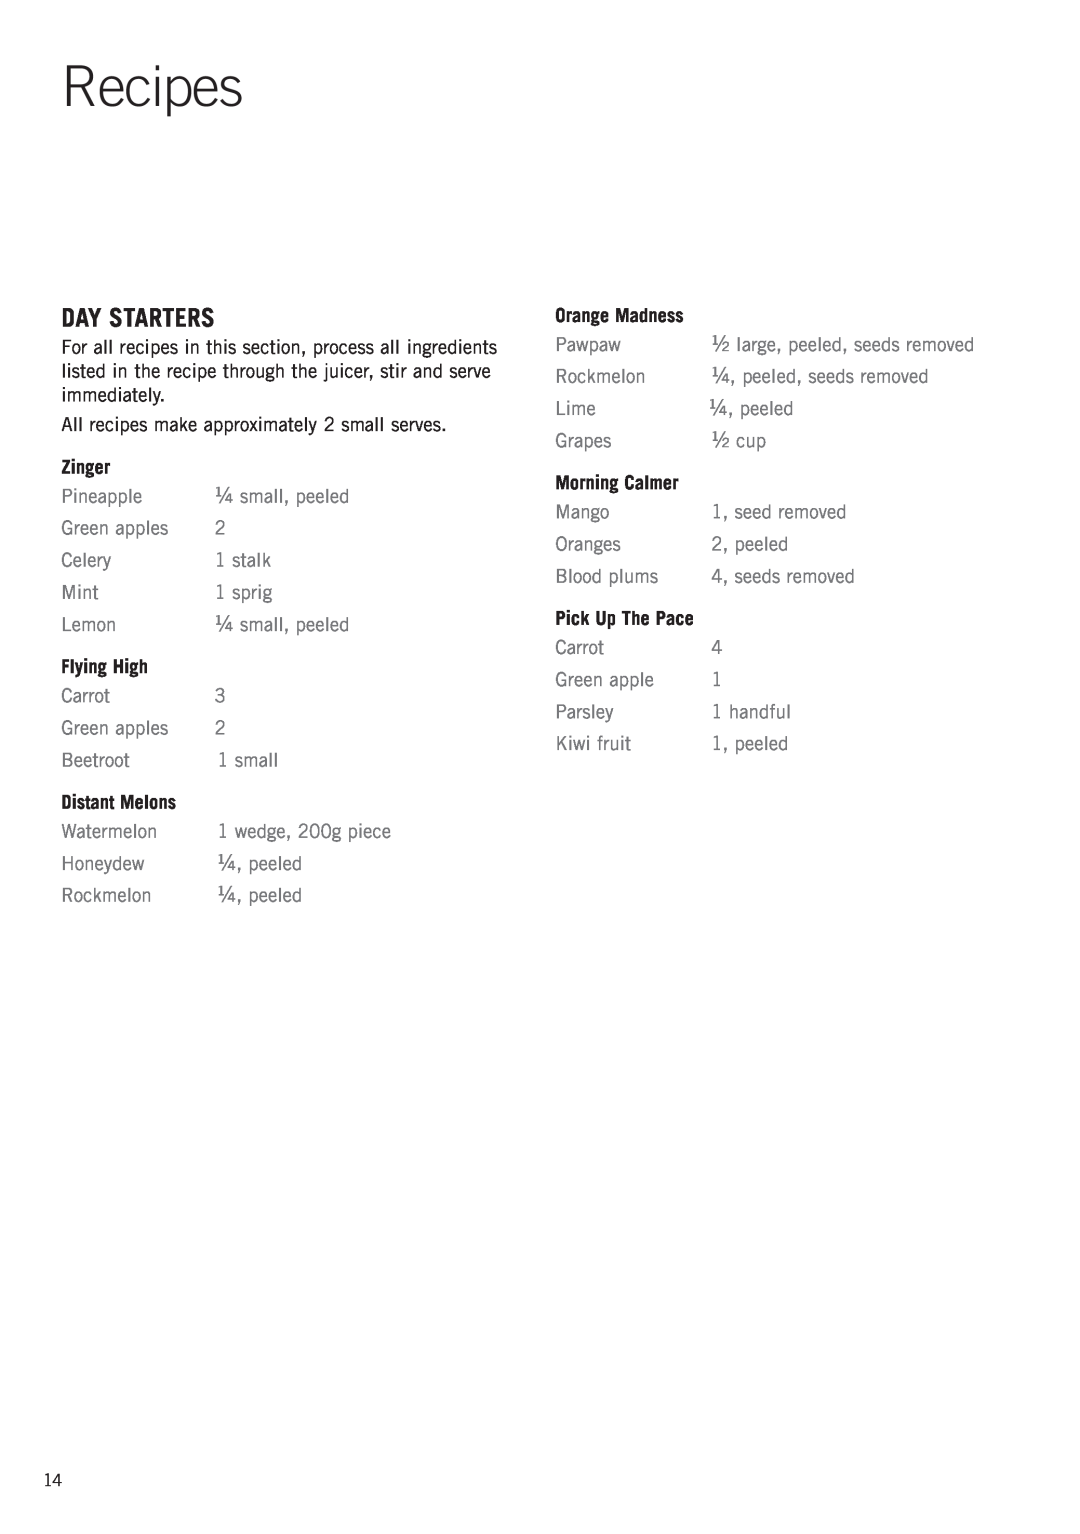 Sunbeam JE8500 manual Recipes, Day Starters, Zinger, Flying High, Morning Calmer 